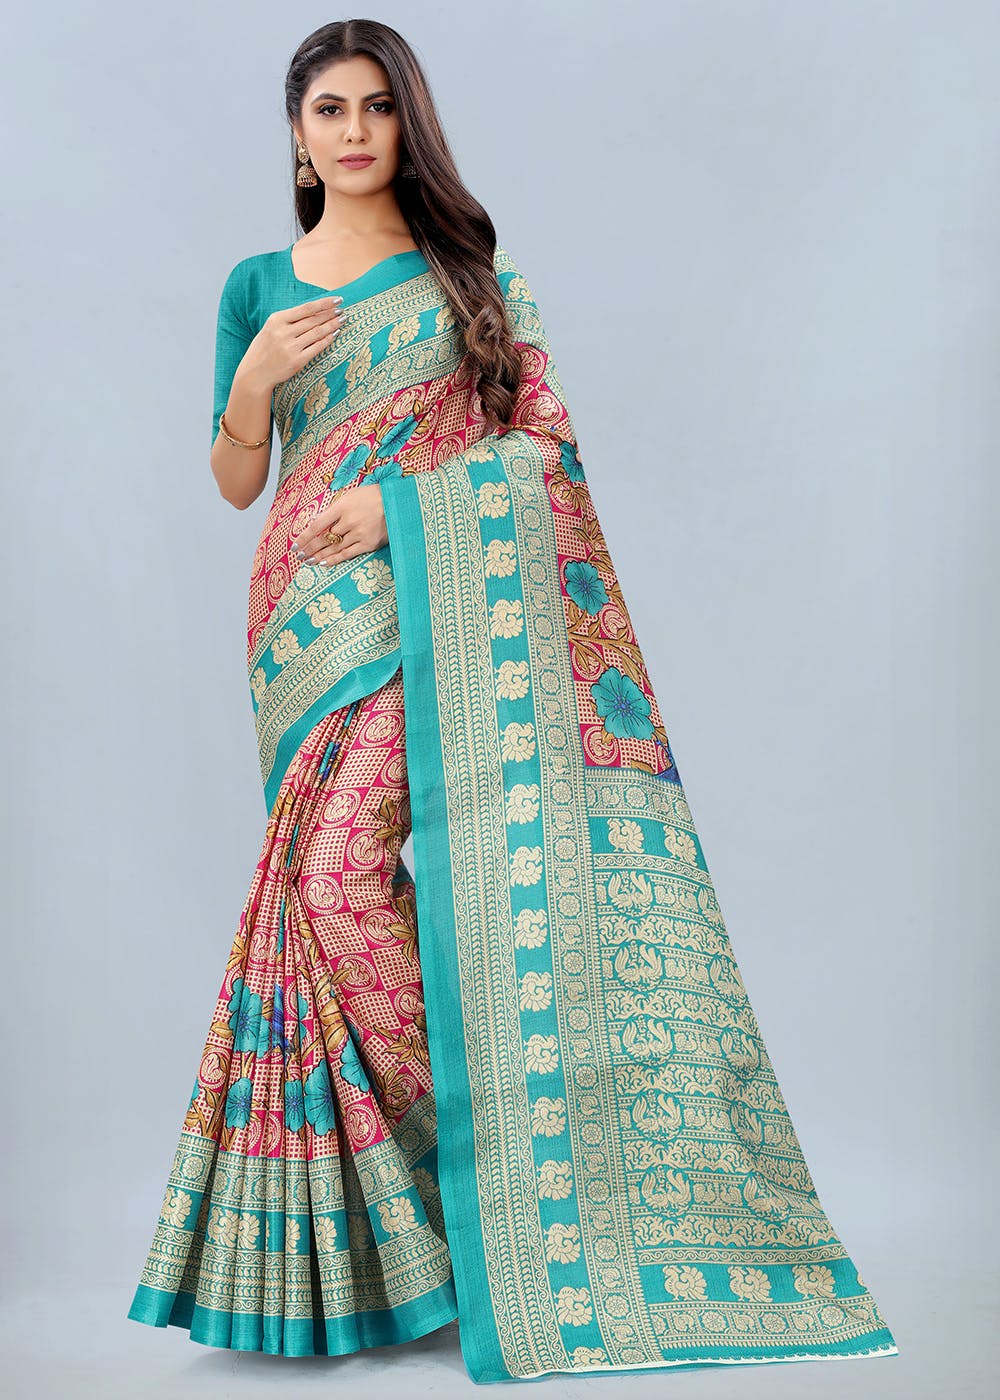 Get Turquoise Soft Tuksar Silk Kalamkari Saree at ₹ 799 | LBB Shop